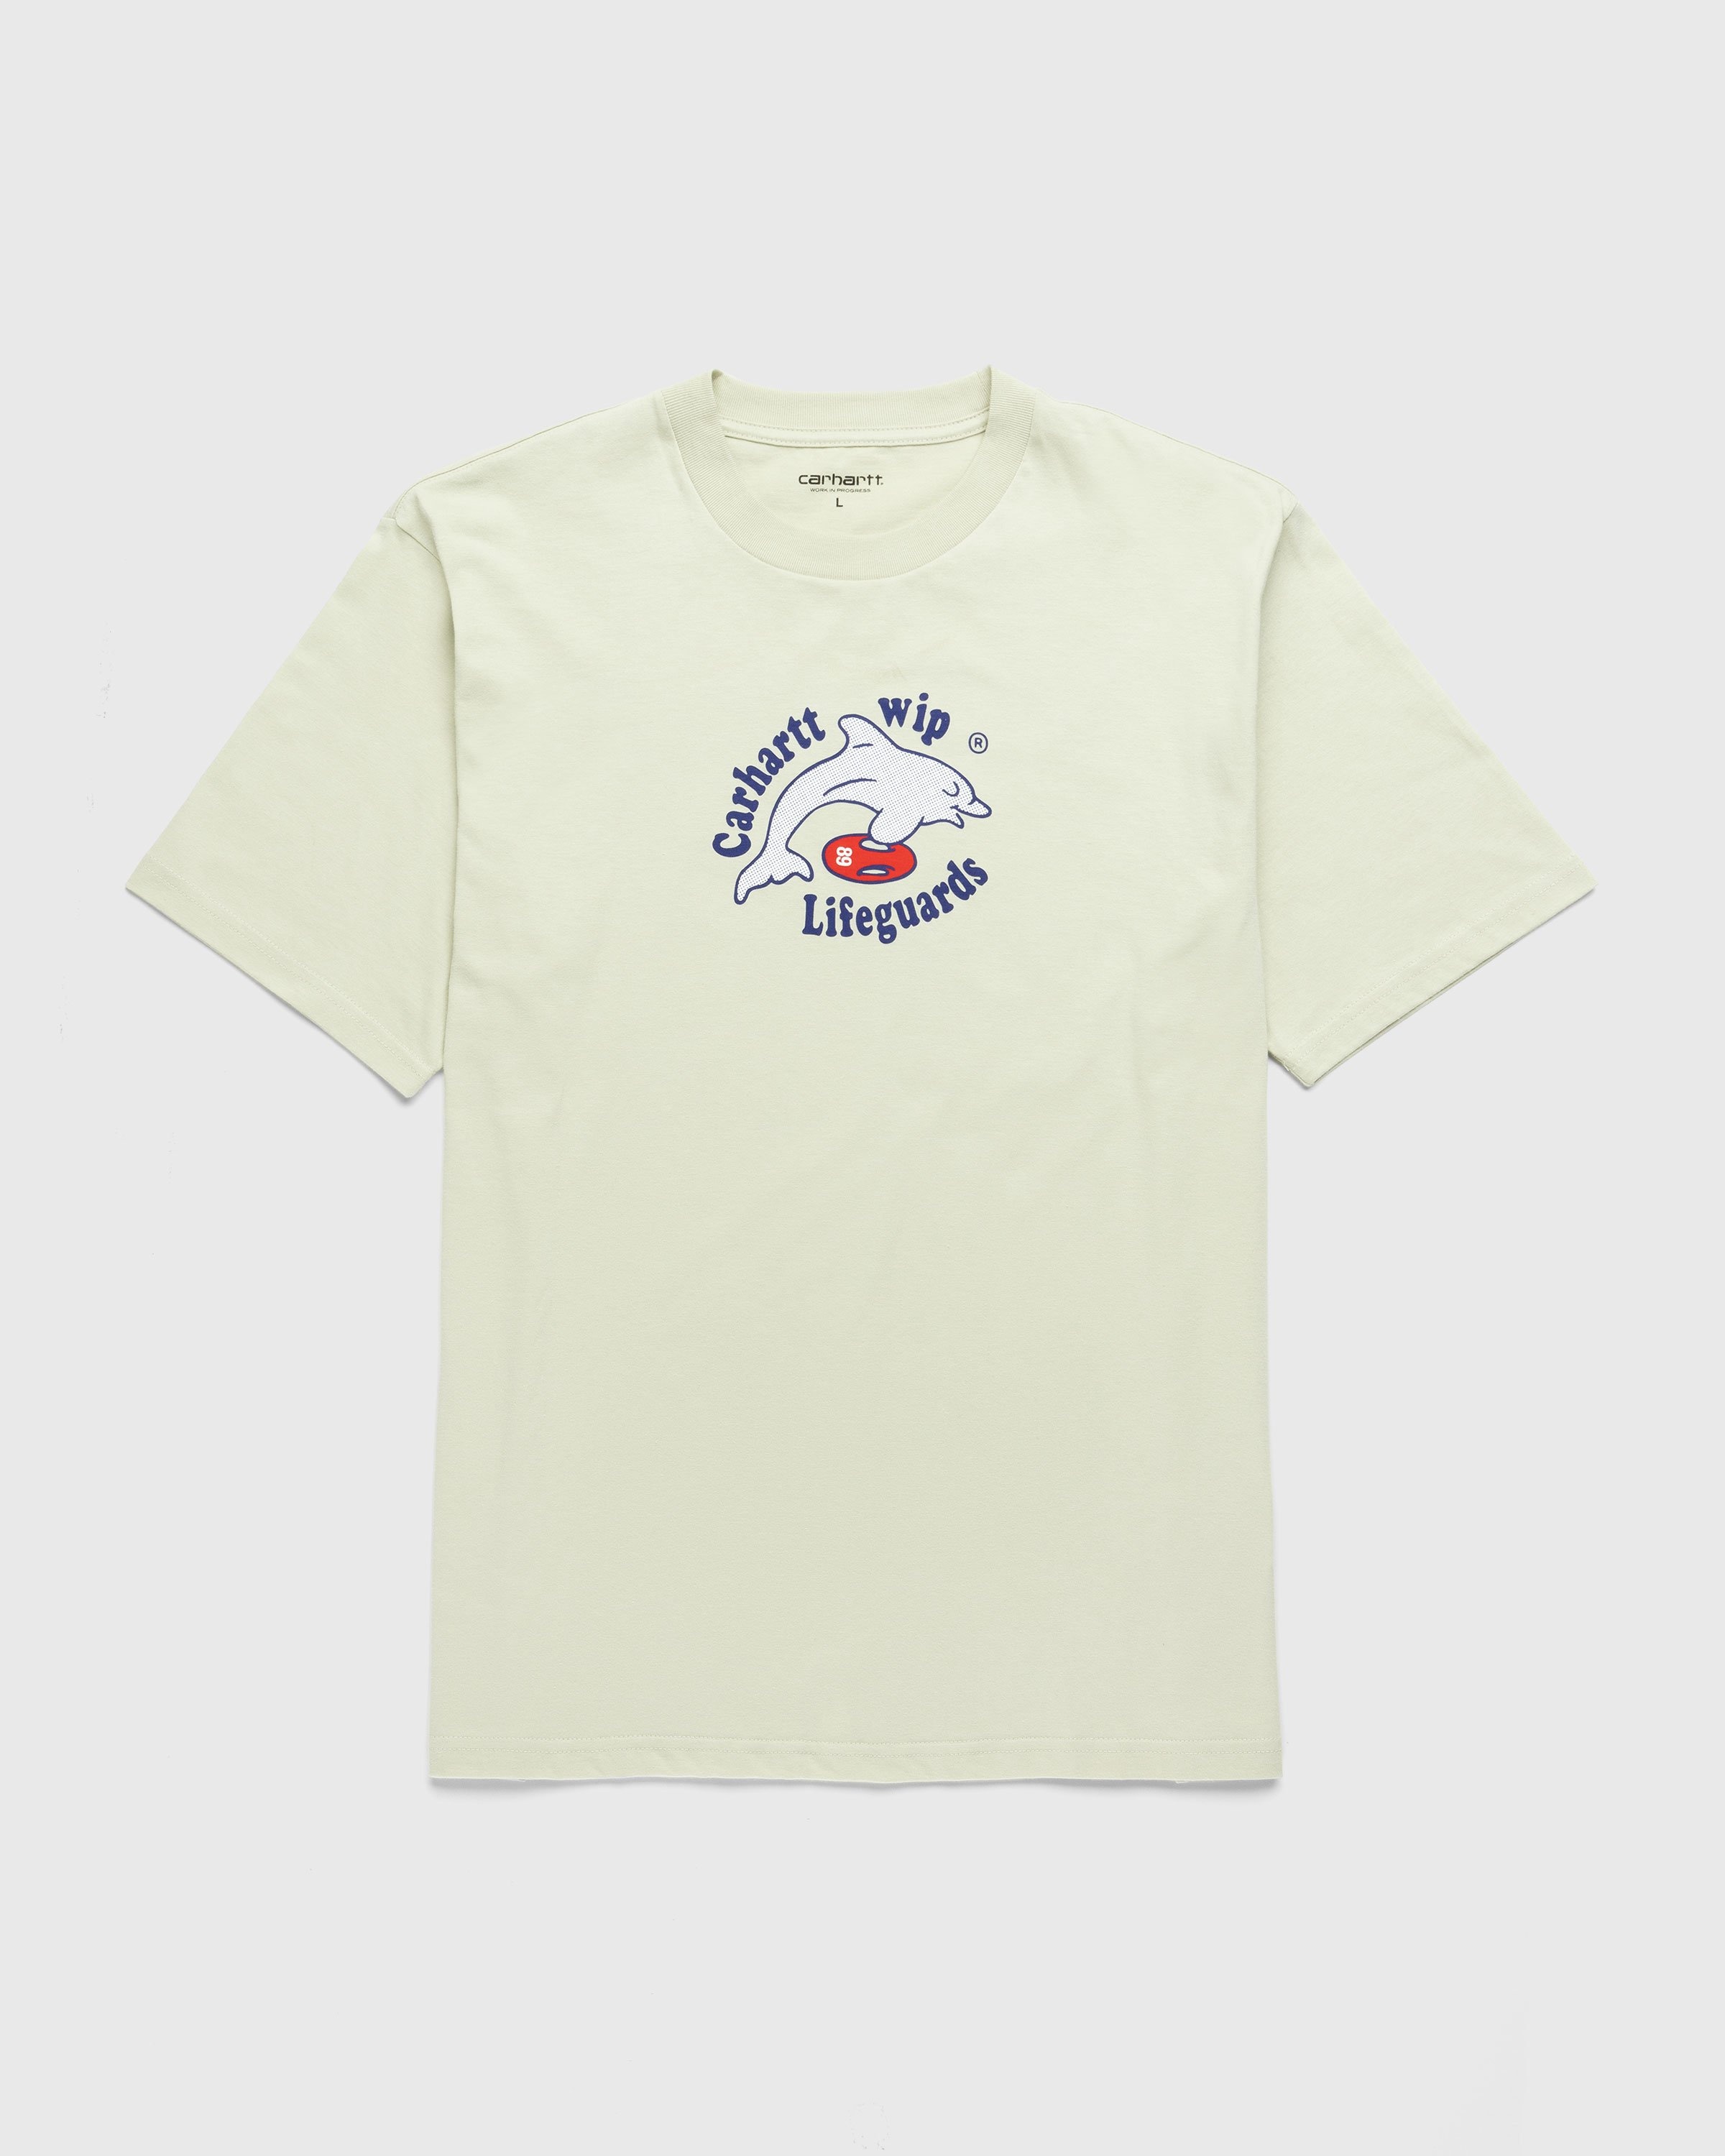 Carhartt WIP – Lifeguards T-Shirt Light Blue - Tops - White - Image 1